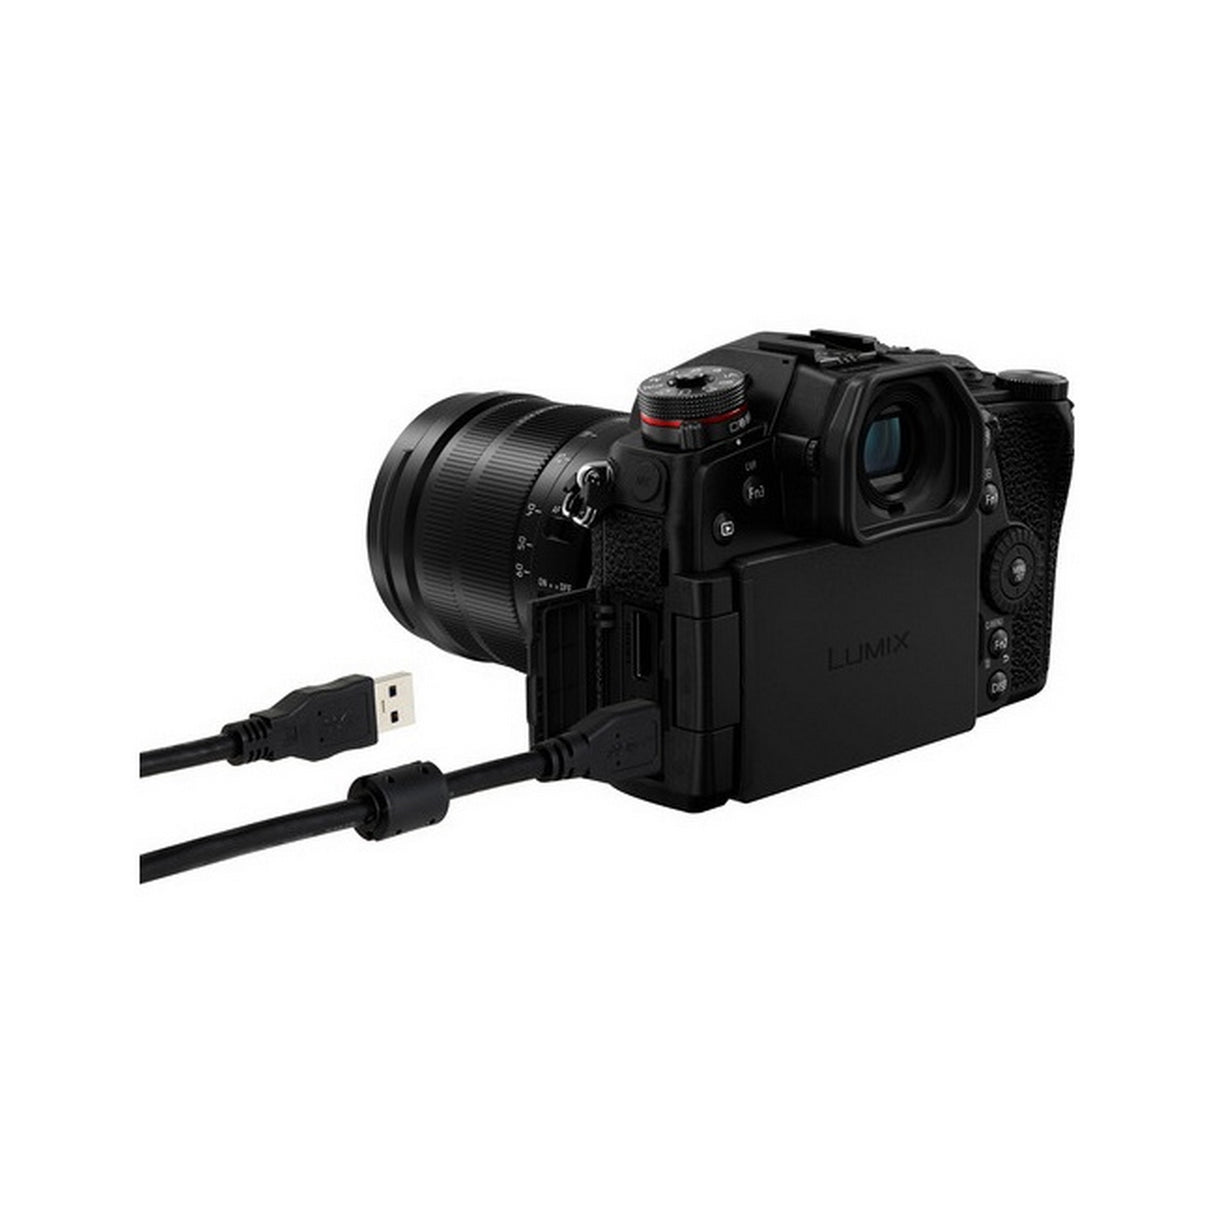 Panasonic LUMIX DC-G9LK Mirrorless Camera with LEICA 12-60mm F2.8-4.0 Lens